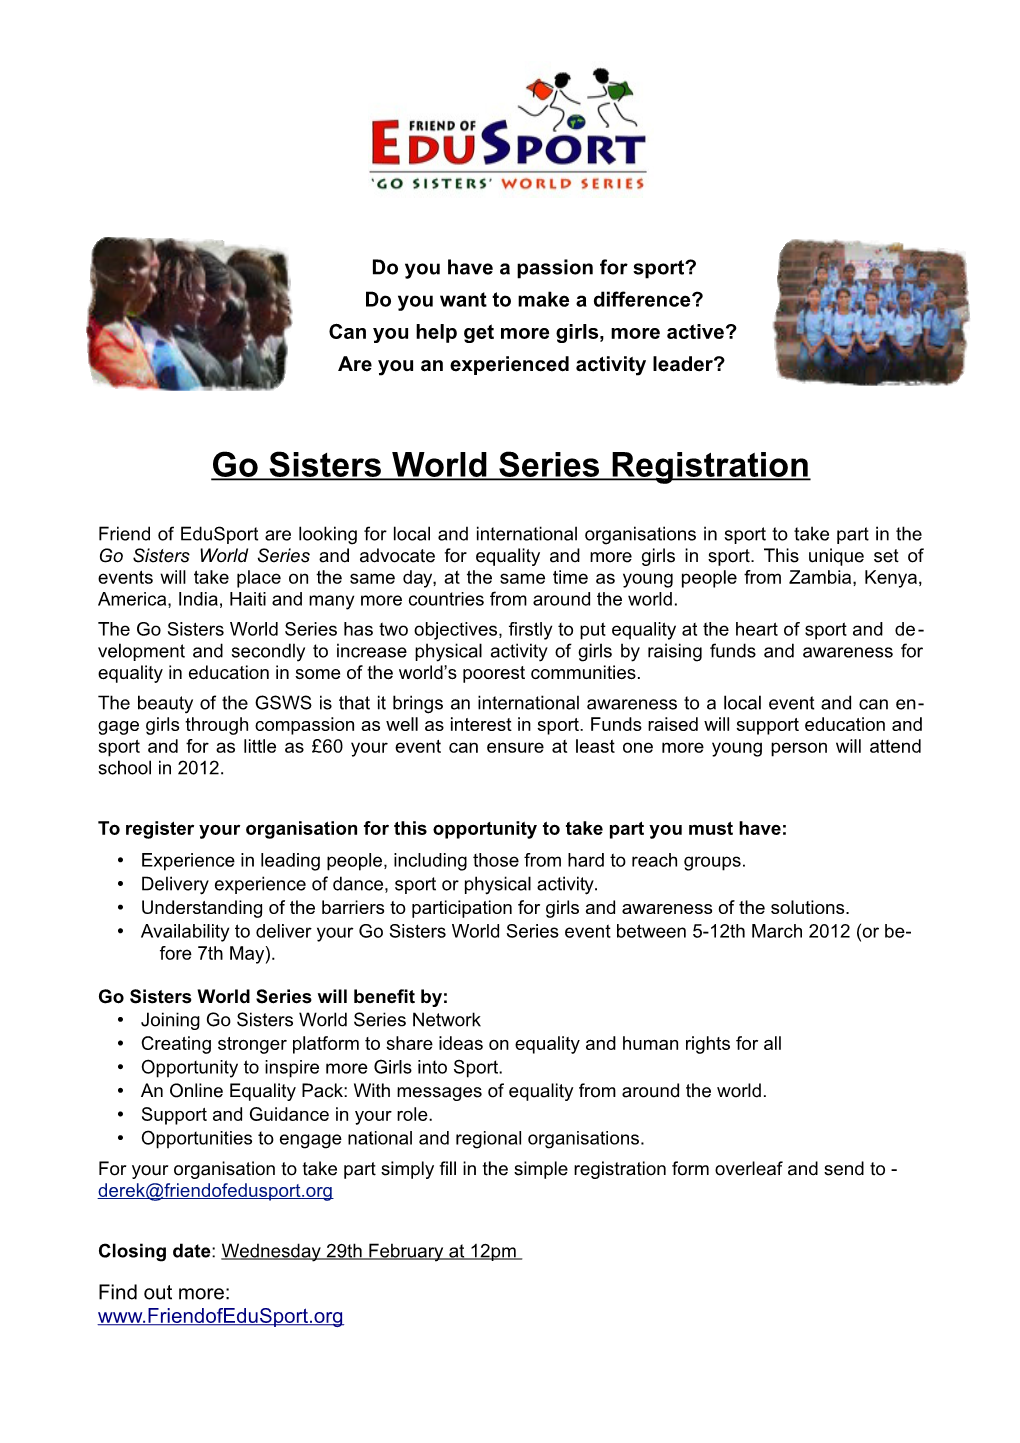 Go Sisters World Series Ambassadors